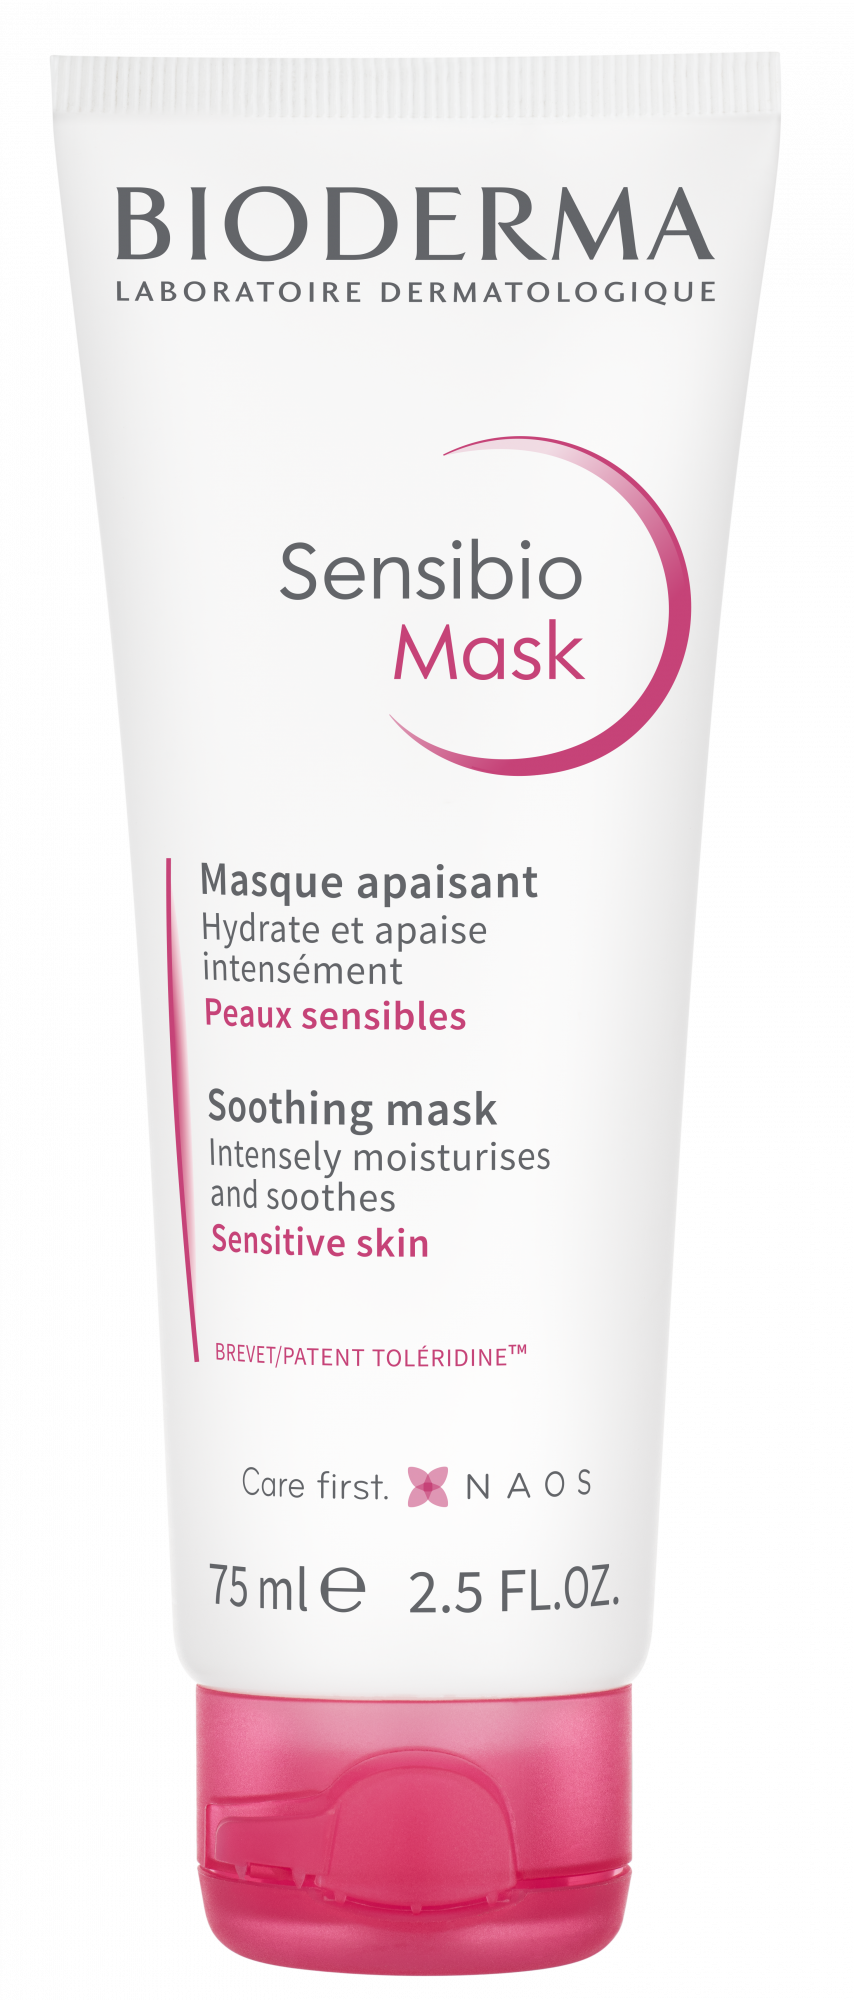 Sensibio Mask | Soothing mask for sensitive skin